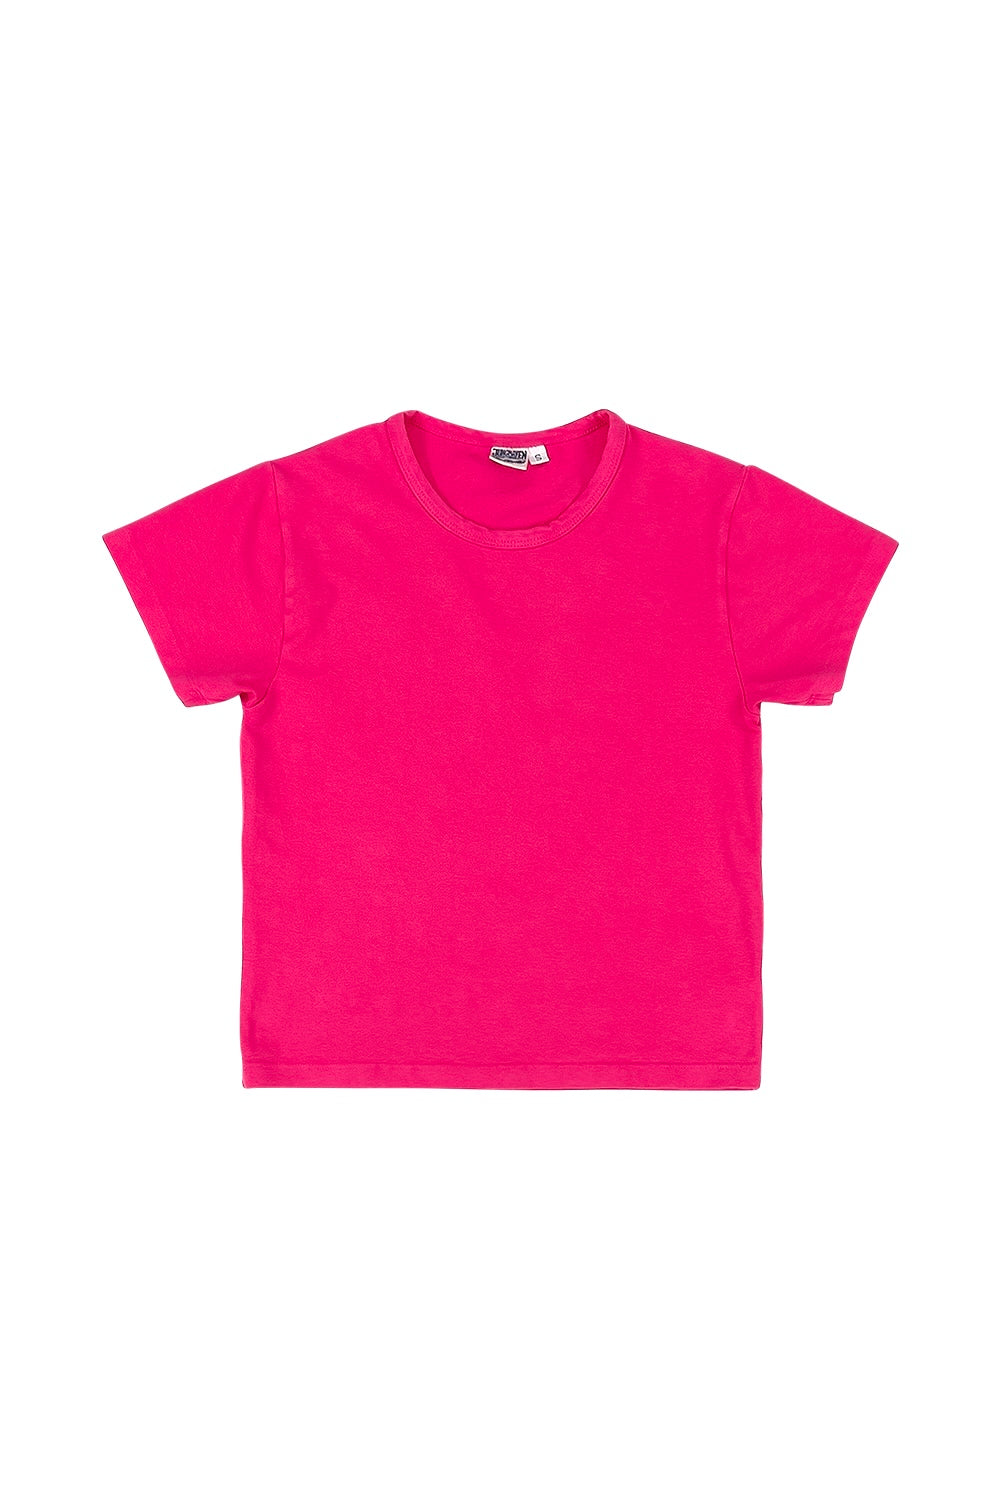 Tiny Tee | Jungmaven Hemp Clothing & Accessories / Color: Pink Grapefruit 